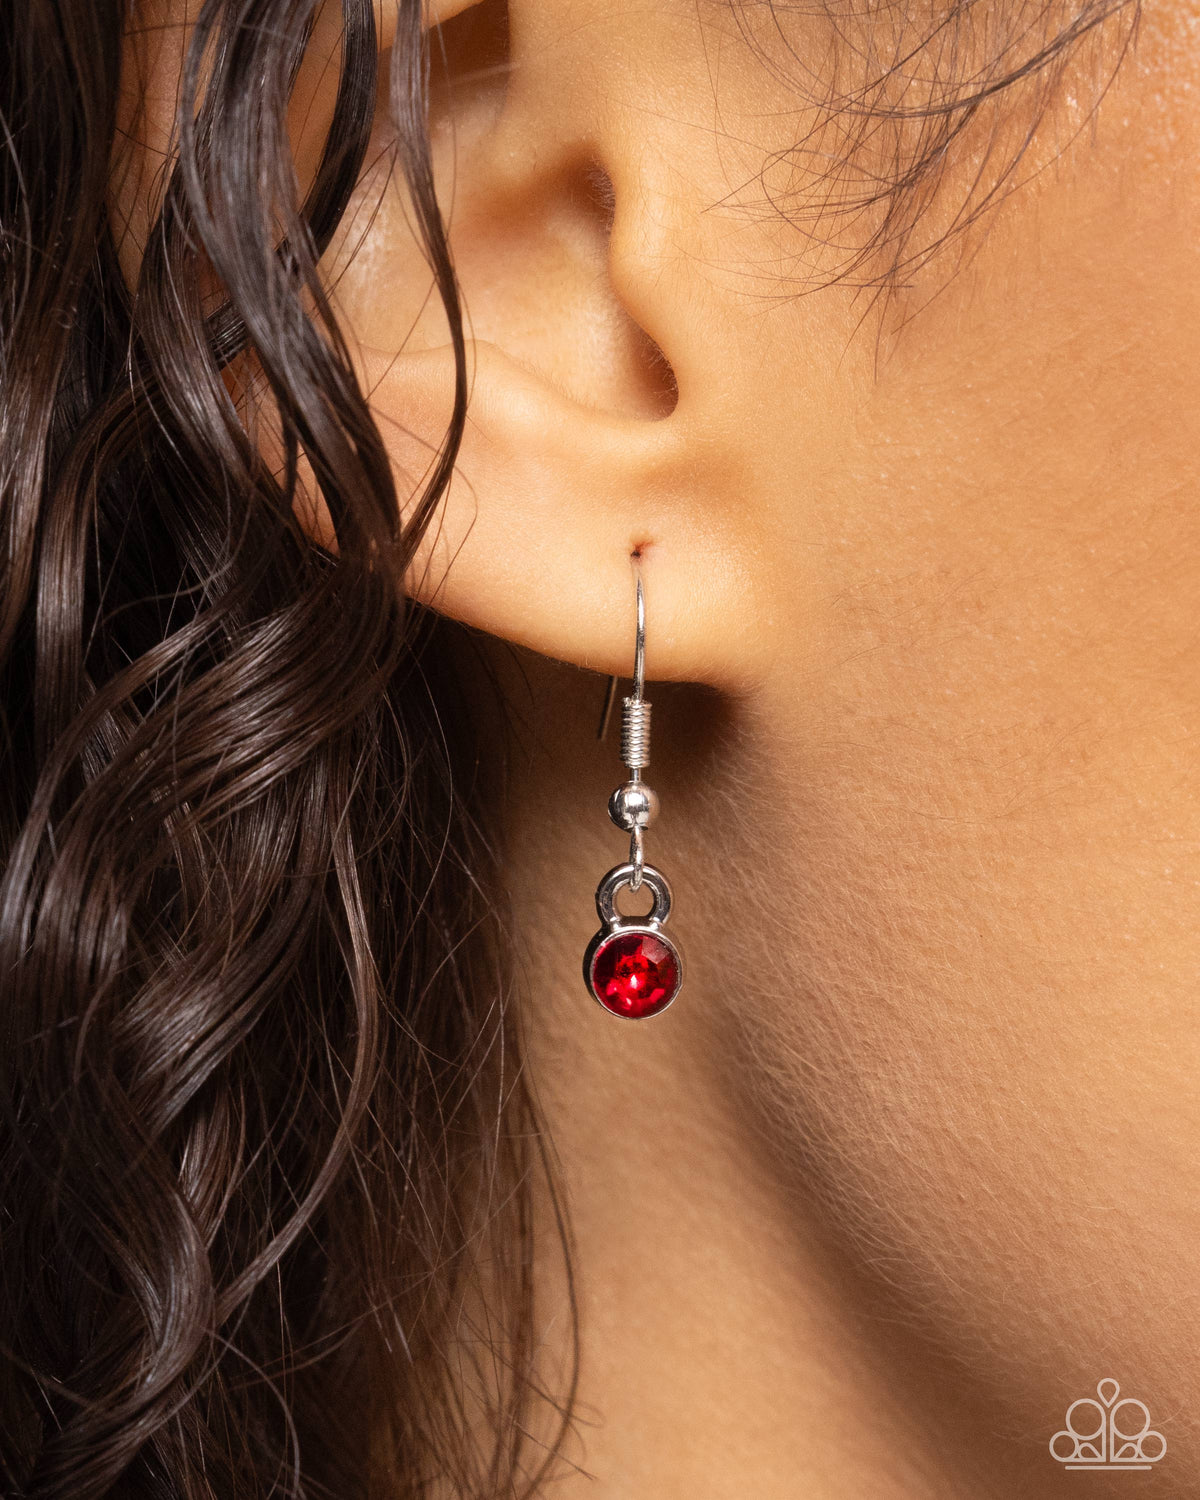 Birthstone Beauty (January) Garnet Red Rhinestone Necklace - Paparazzi Accessories - free matching earrings - CarasShop.com - $5 Jewelry by Cara Jewels